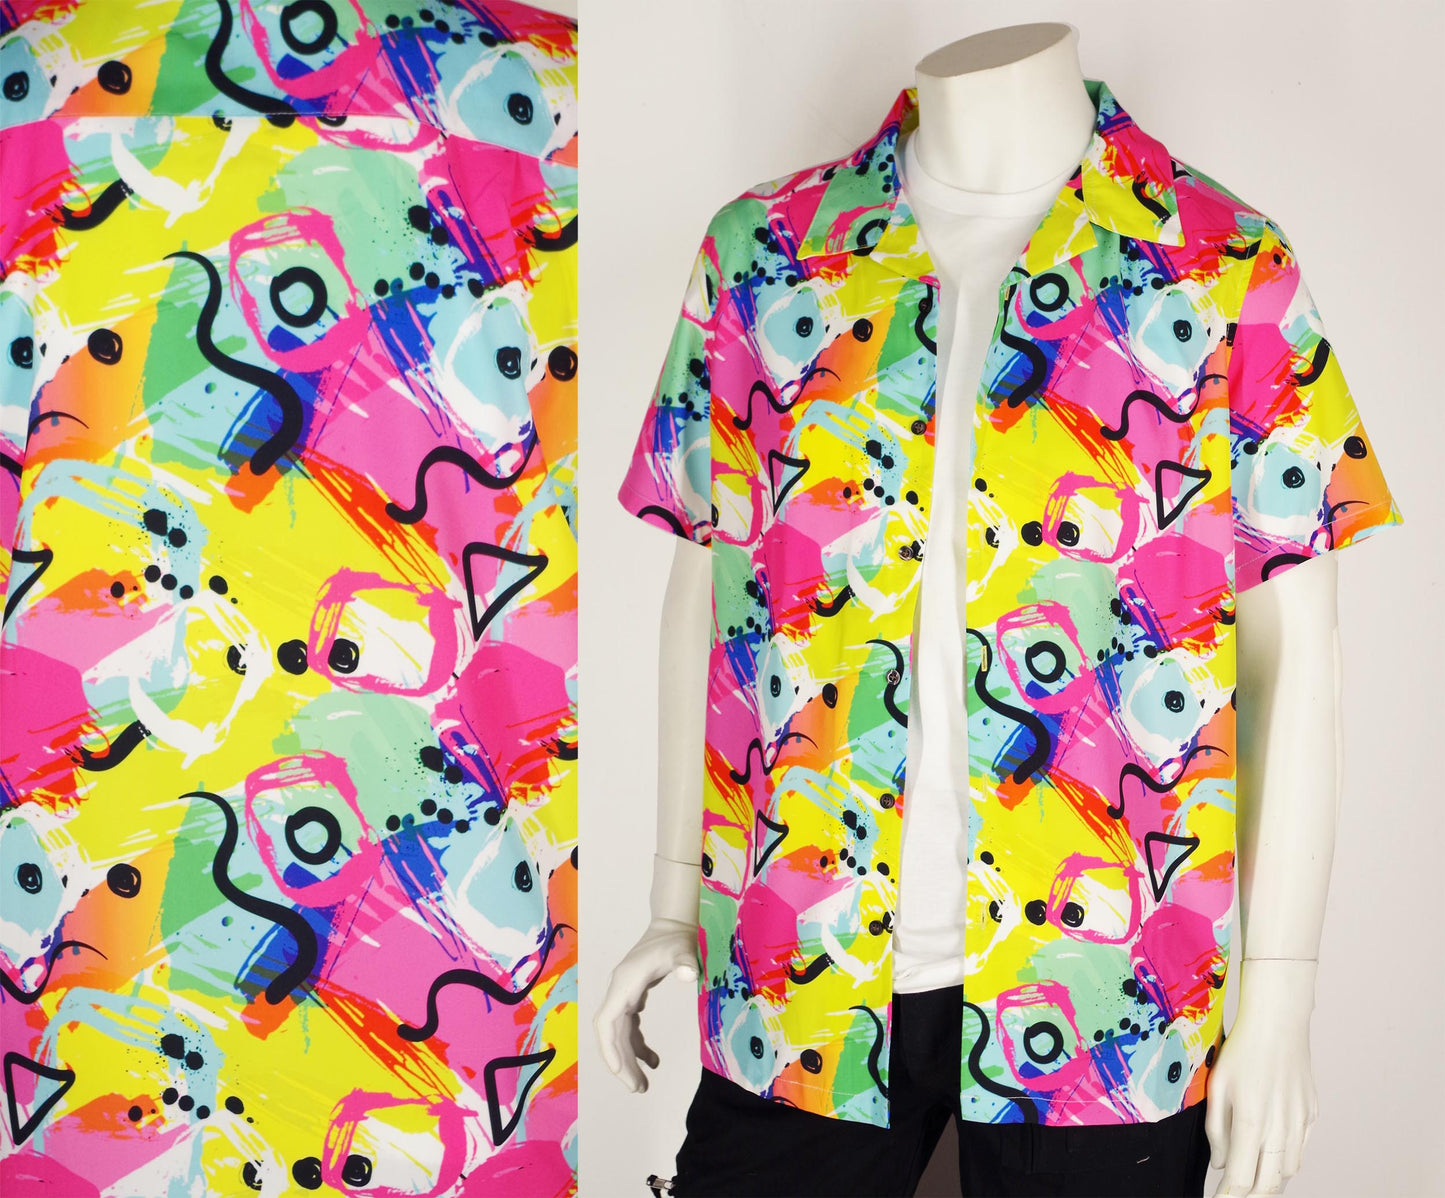 Festival Button Up Shirt in Memphis Splash Bold Colourful Print